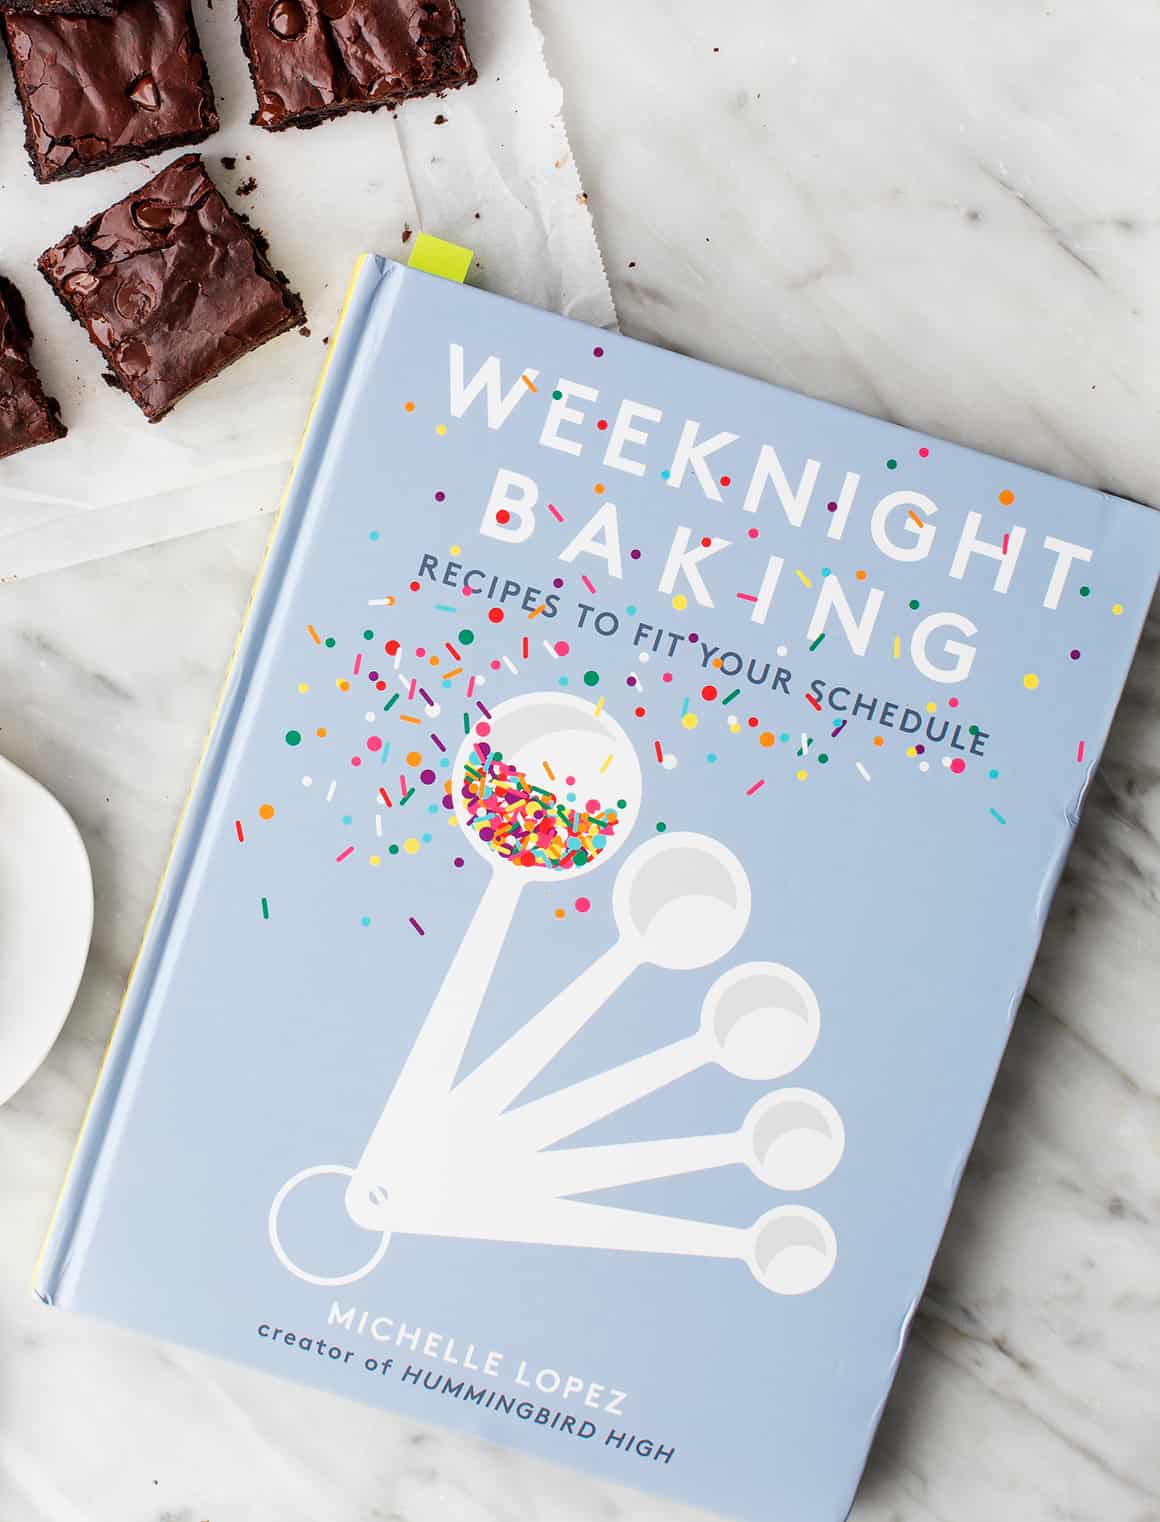 Weeknight baking book